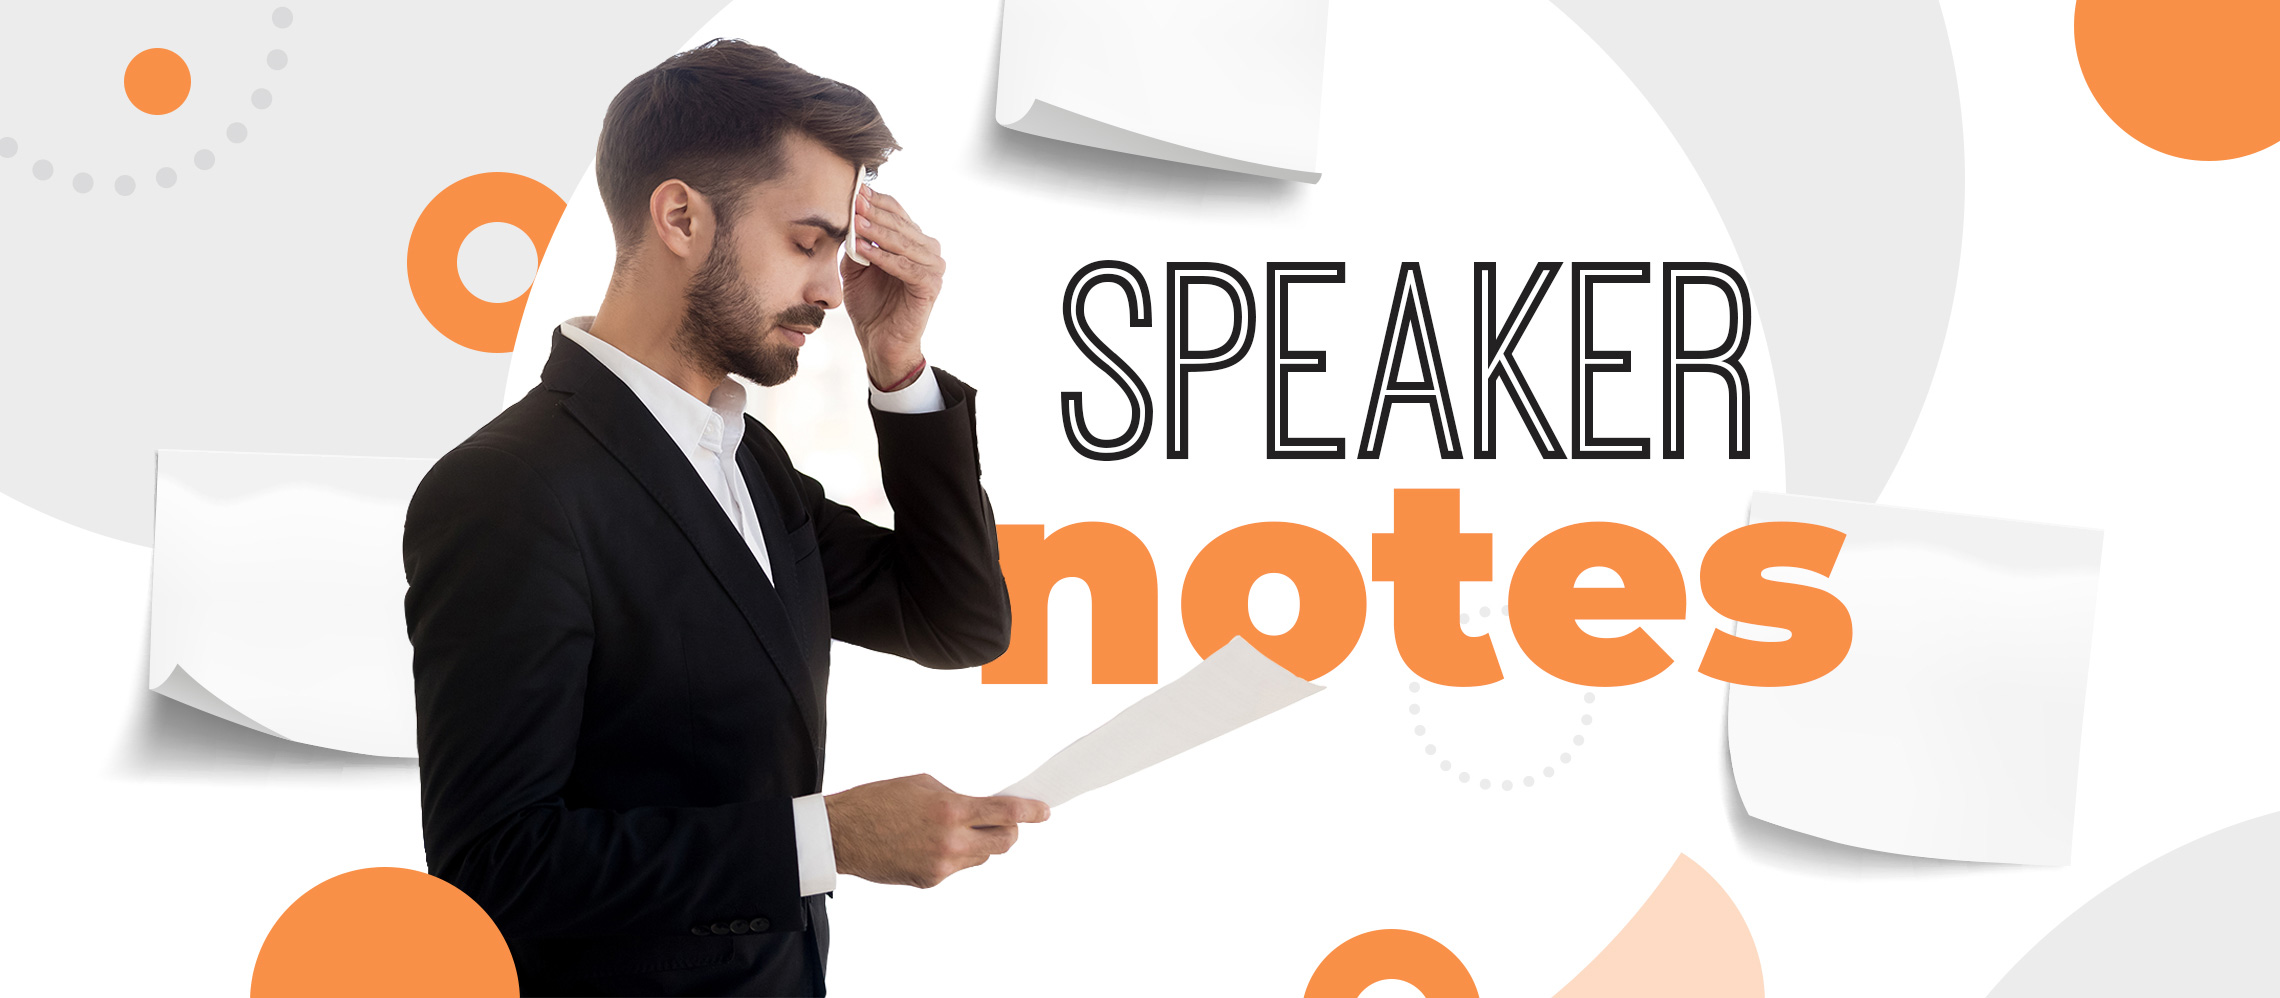 use speaker notes powerpoint presentation